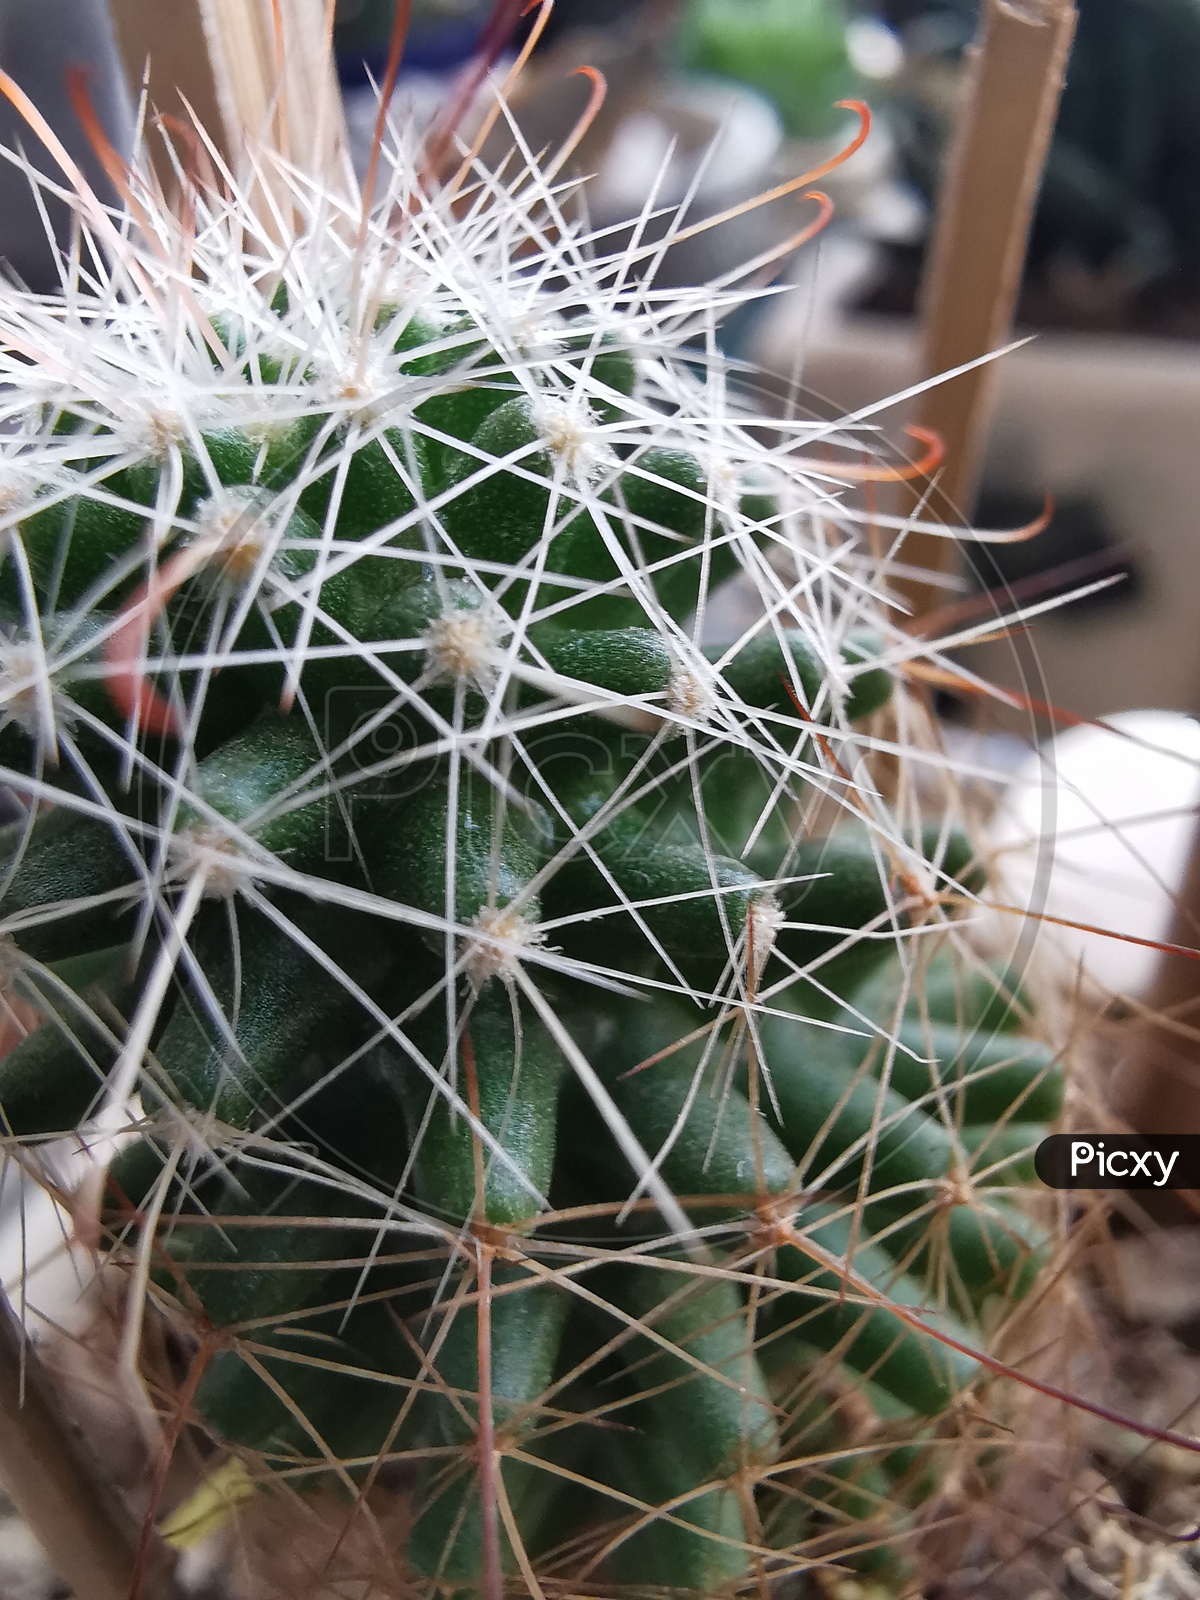 Cactus Plant Closeup With Thorns